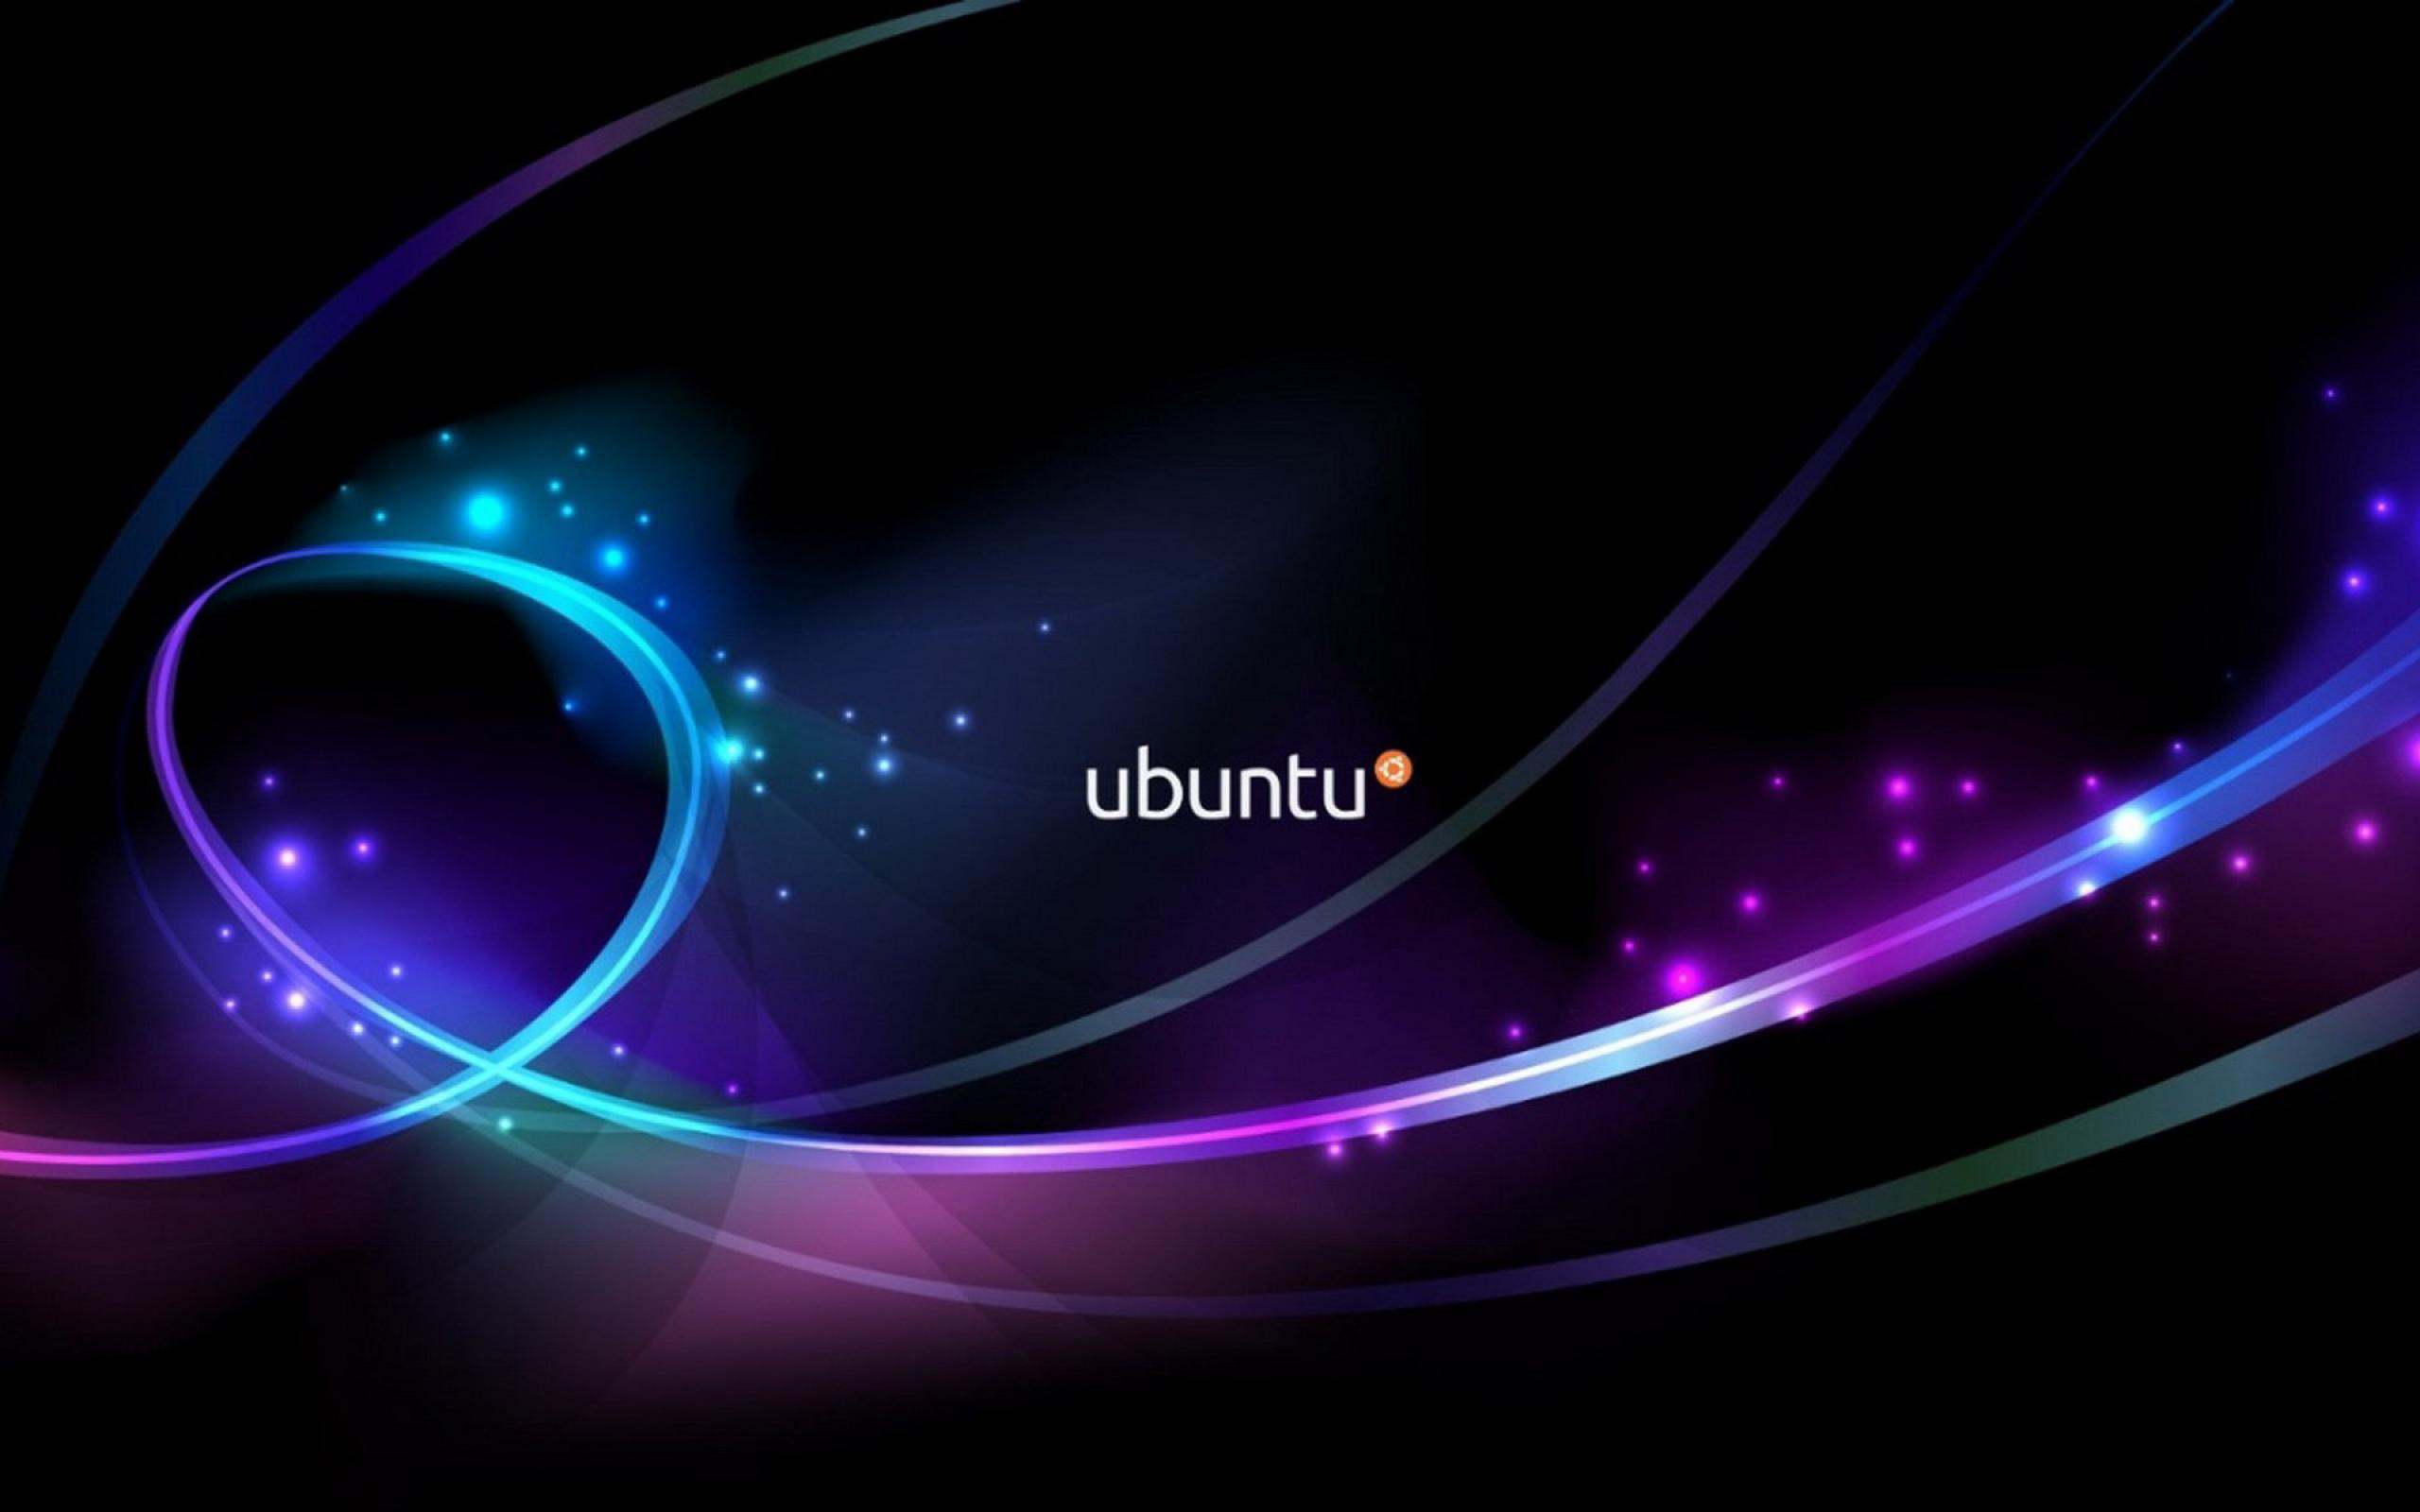 Ubuntu Wallpapers - Background For Ubuntu - HD Wallpaper 